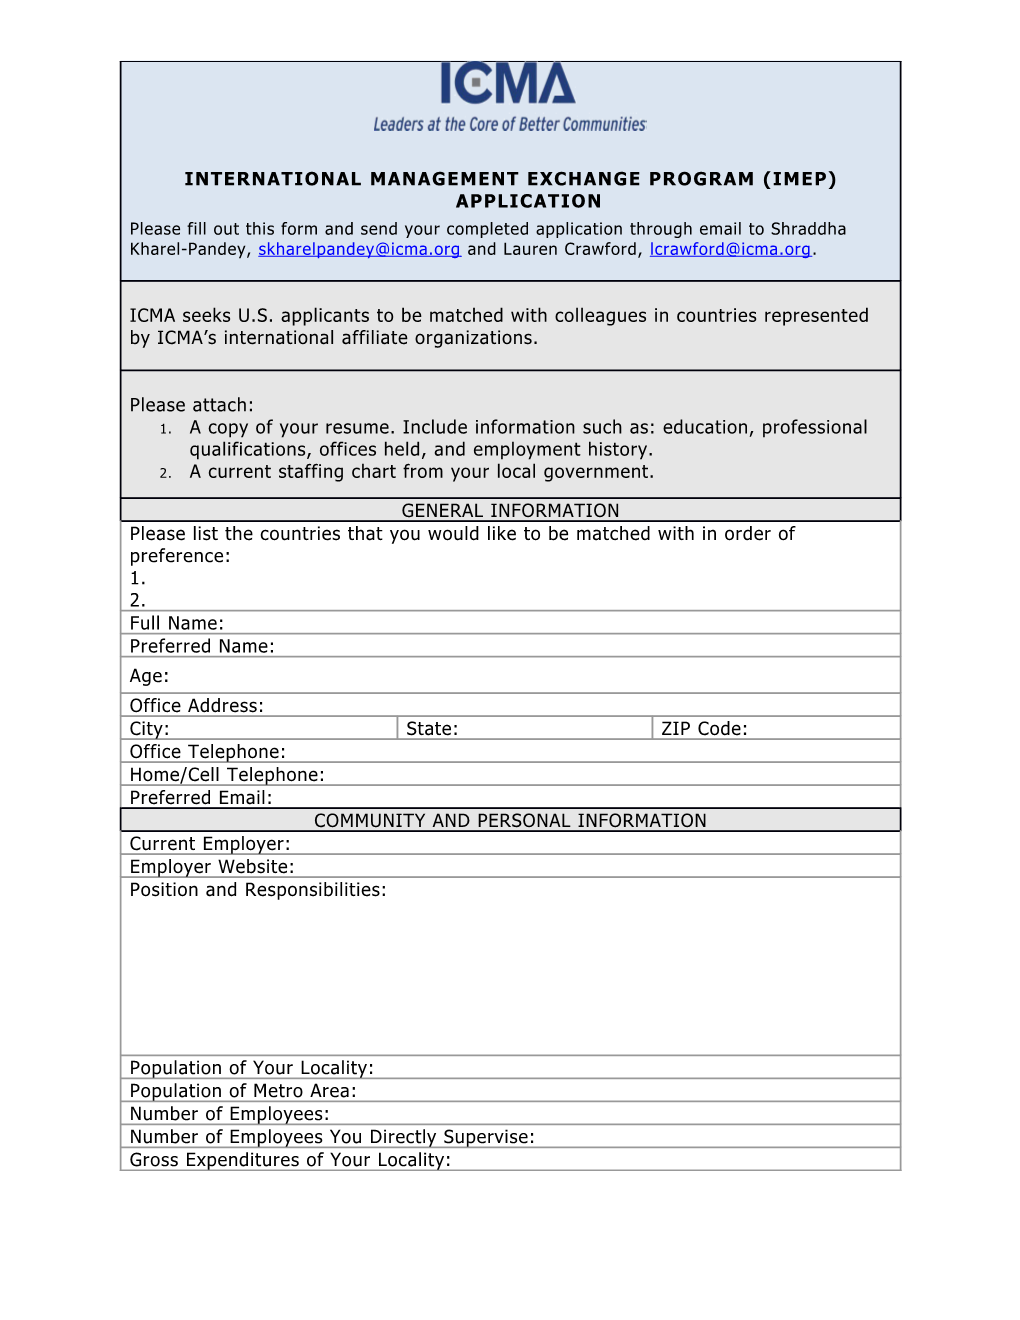 International Management Exchange Program (IMEP) Application